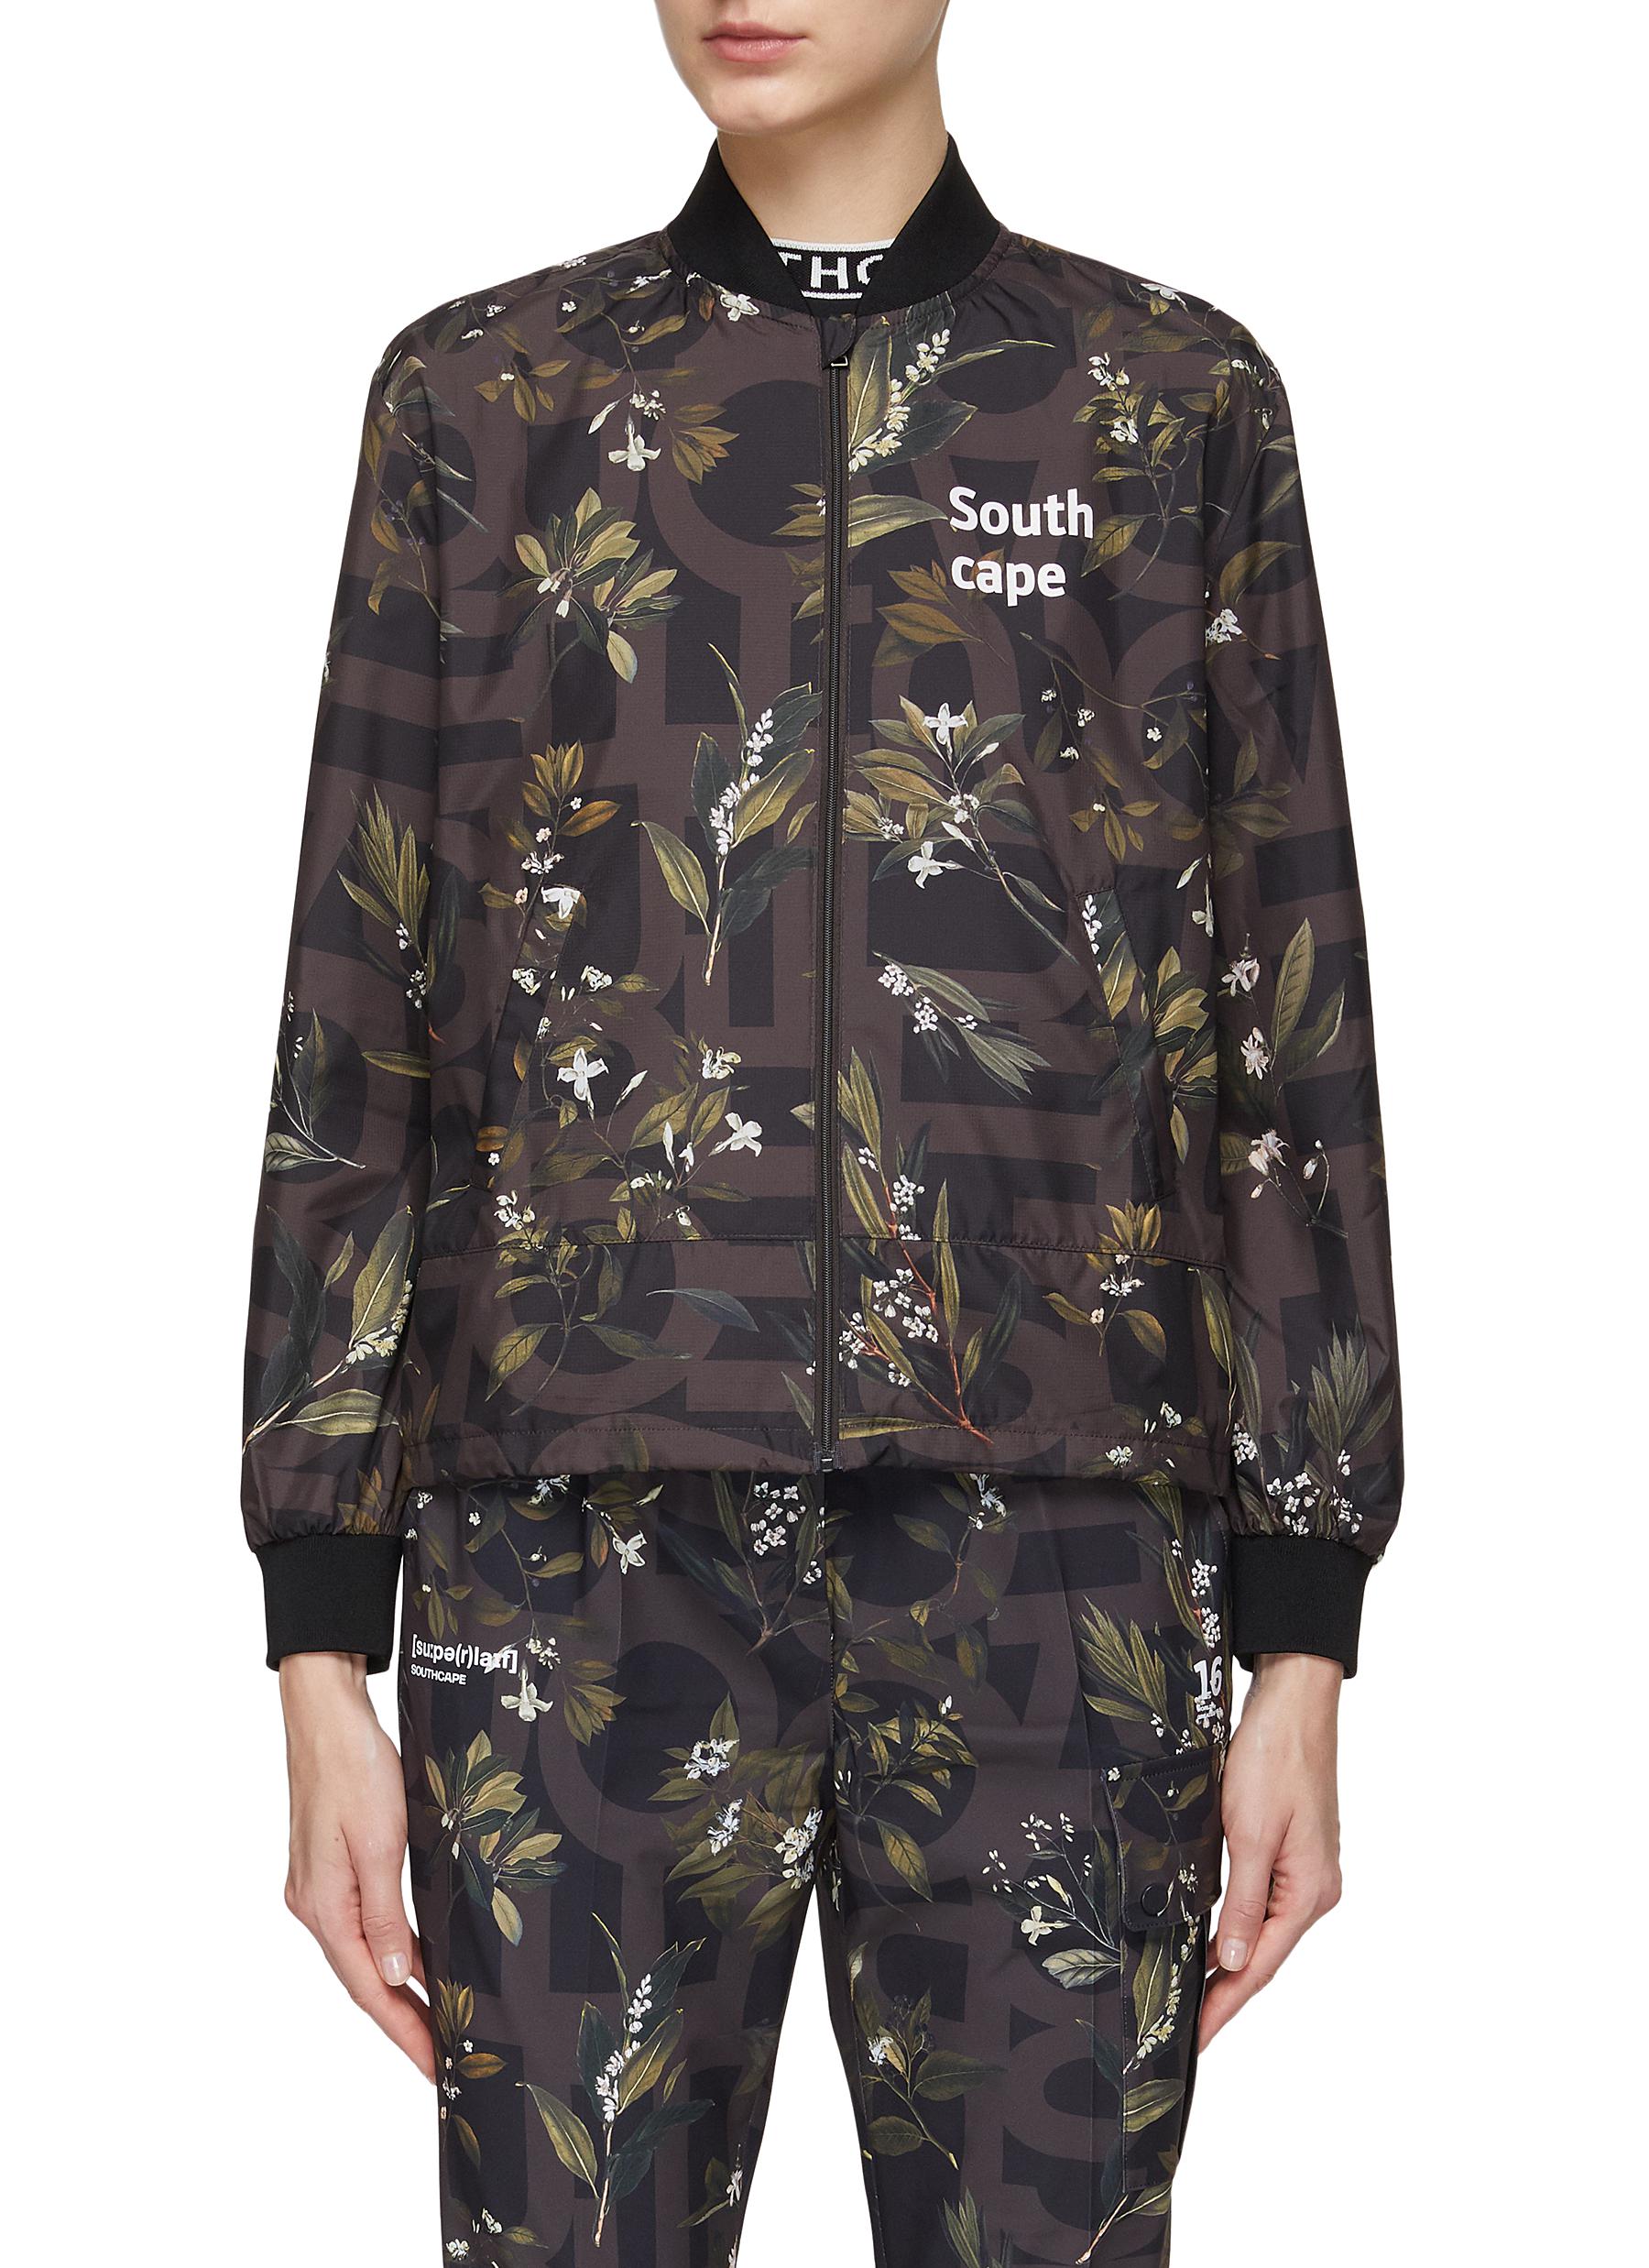 Southcape Monogram Floral Print Zip Up Jacket In Brown